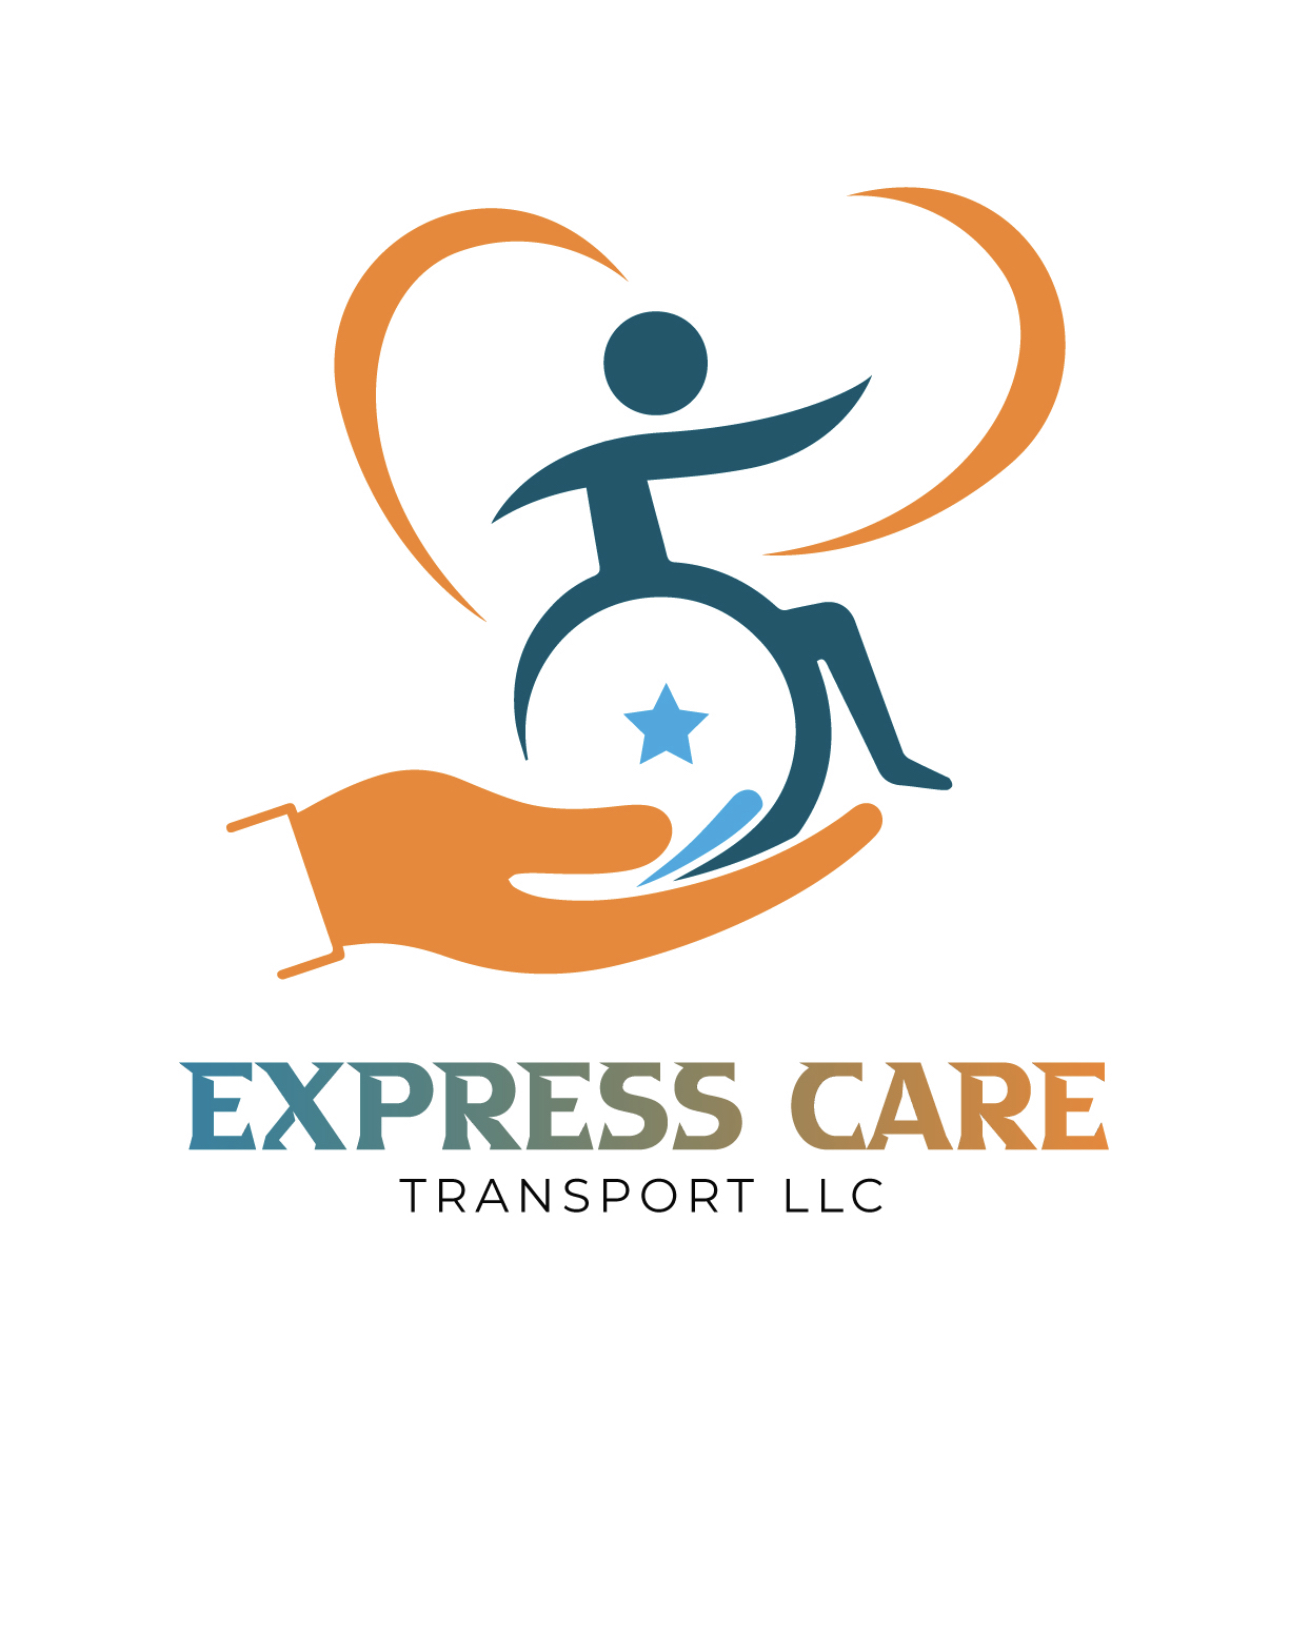 Express Care Transport